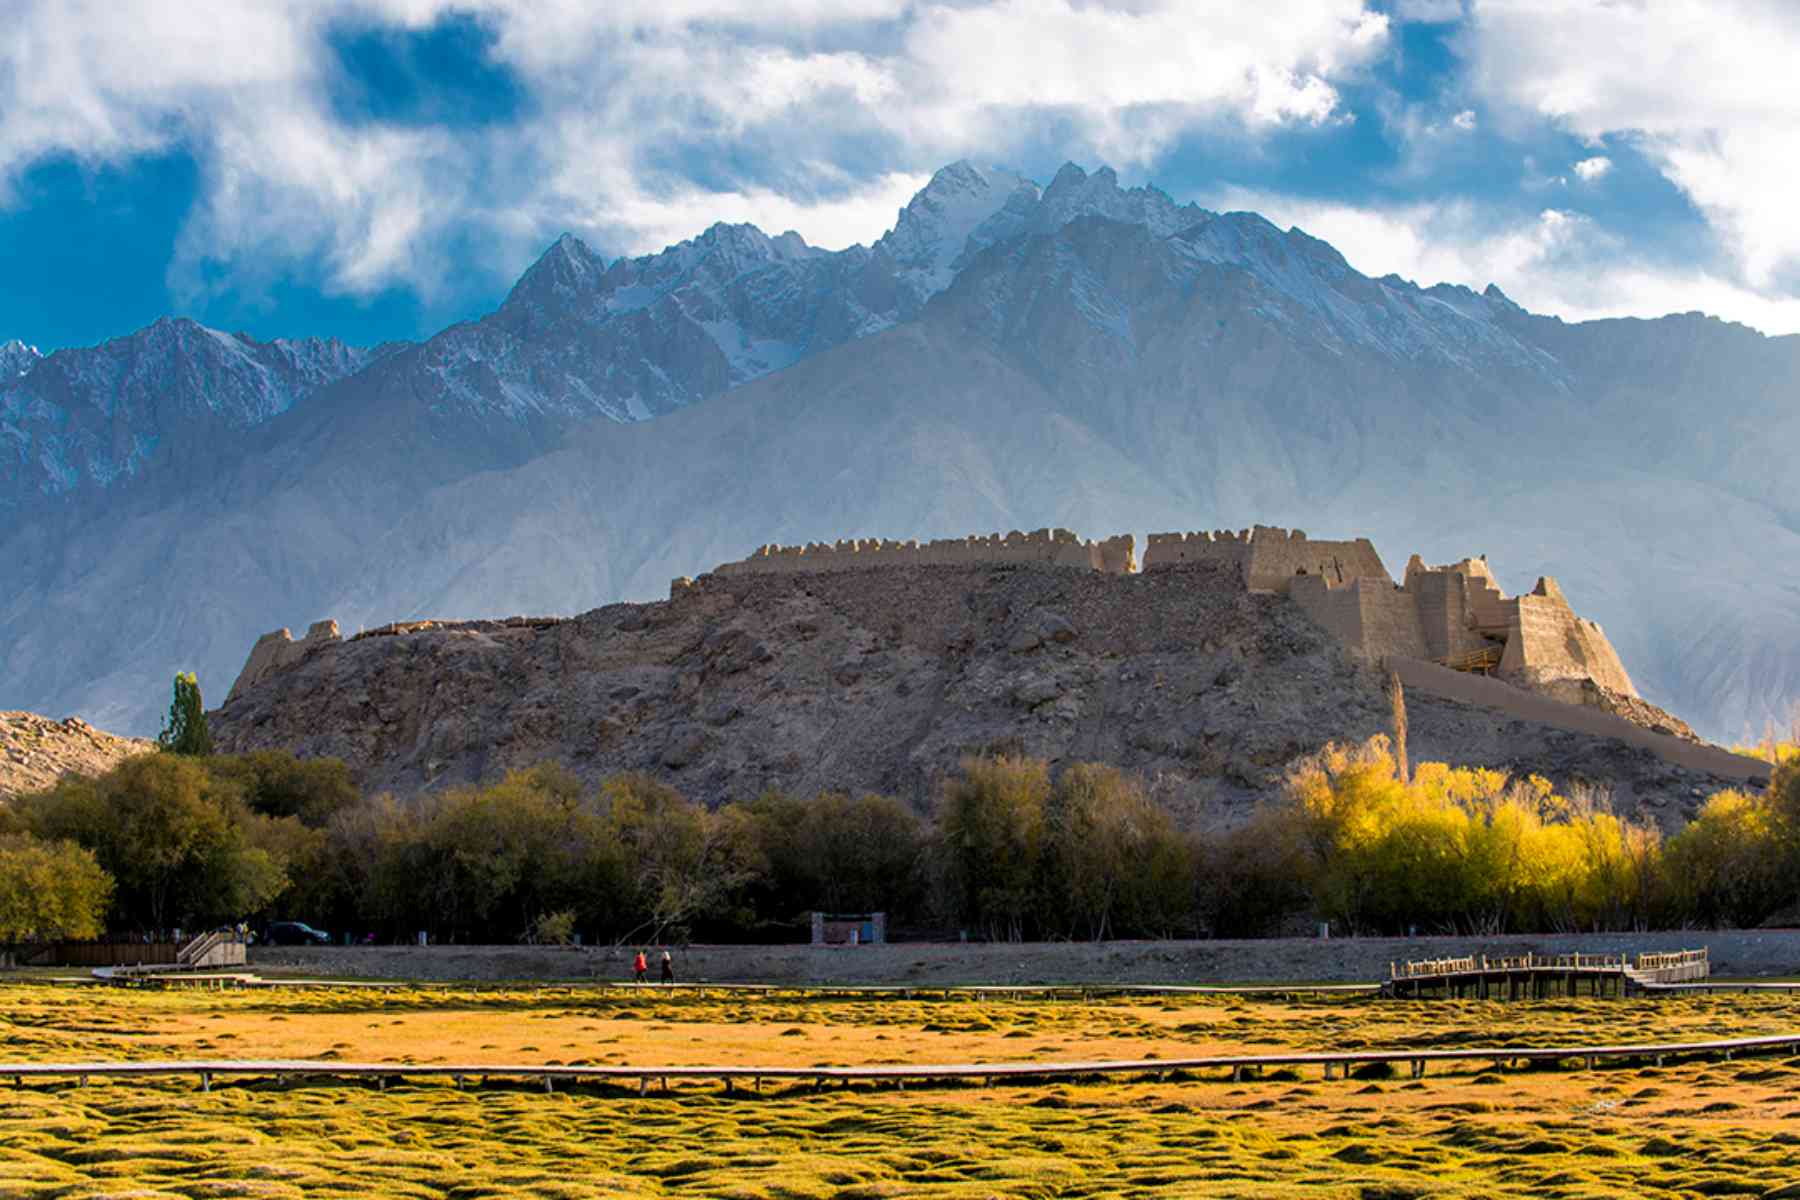 8-Day South Xinjiang Private Tour of Urumqi Turpan and Kashgar